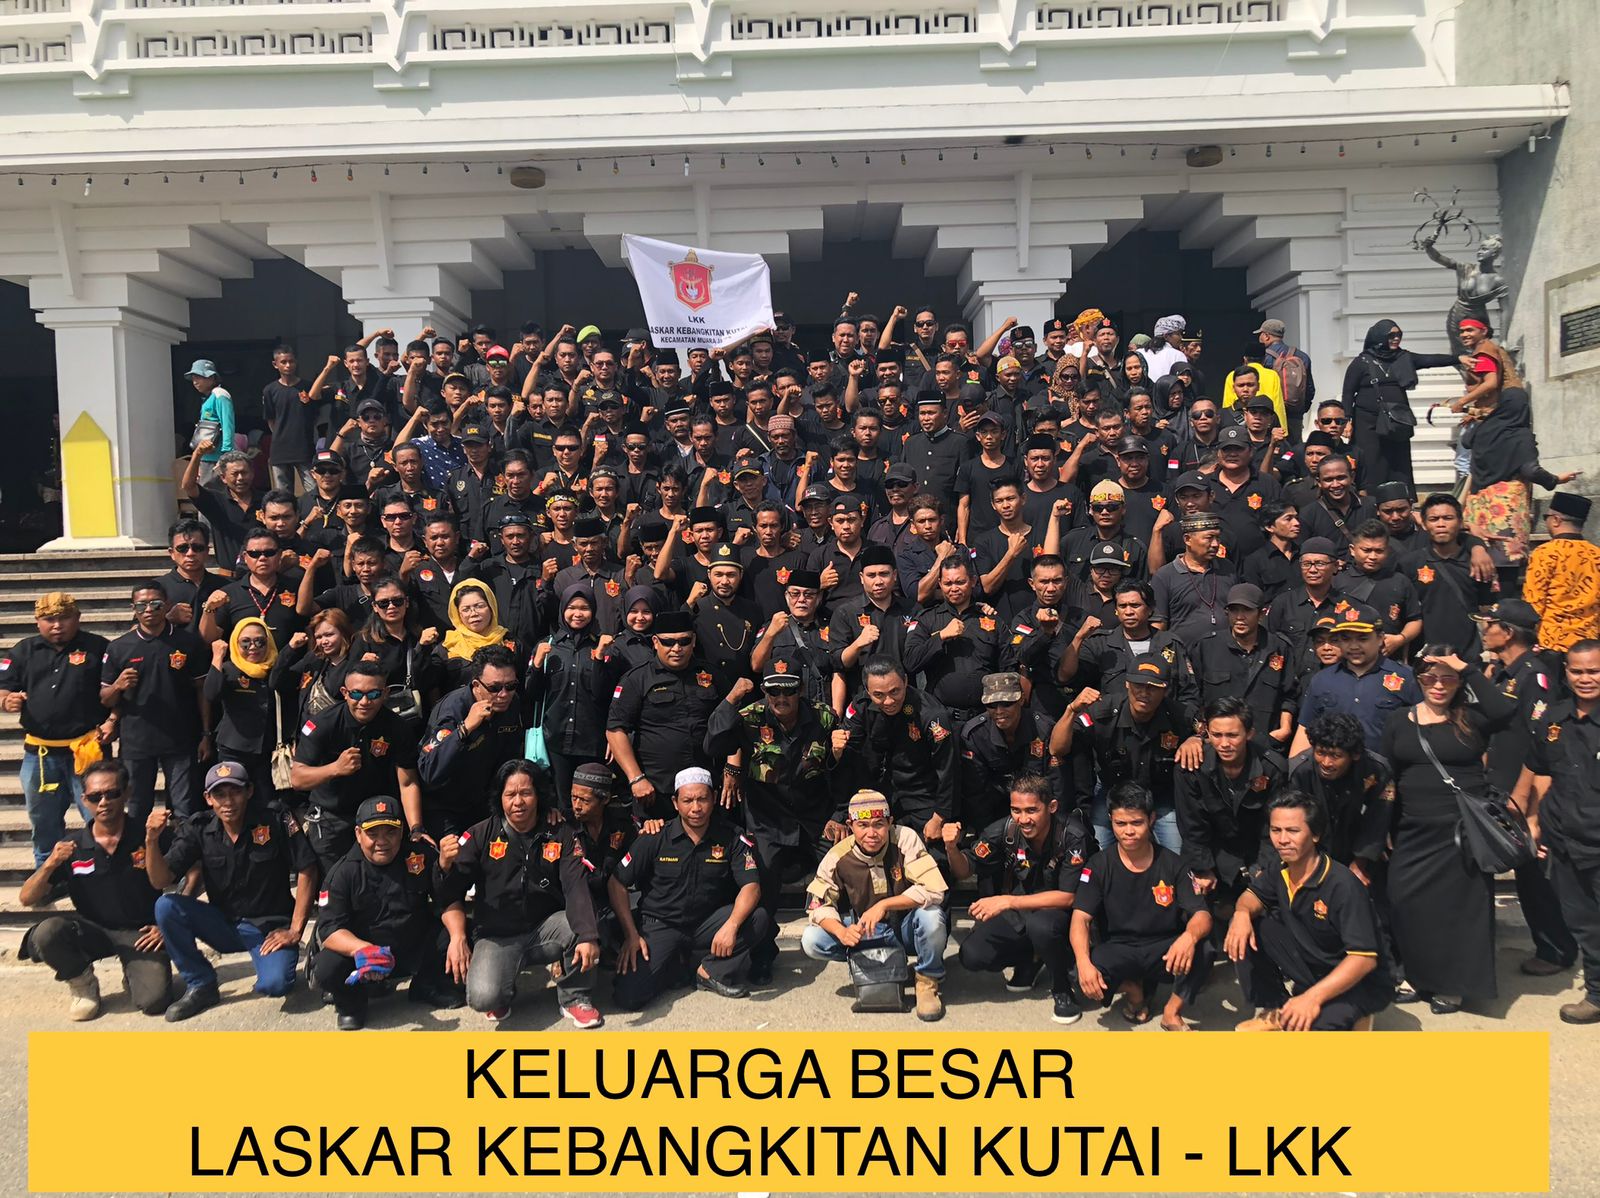 LKK Usulkan Sultan Kutai dan Sultan Paser Jadi Kepala dan Wakil Kepala Otorita IKN Nusantara